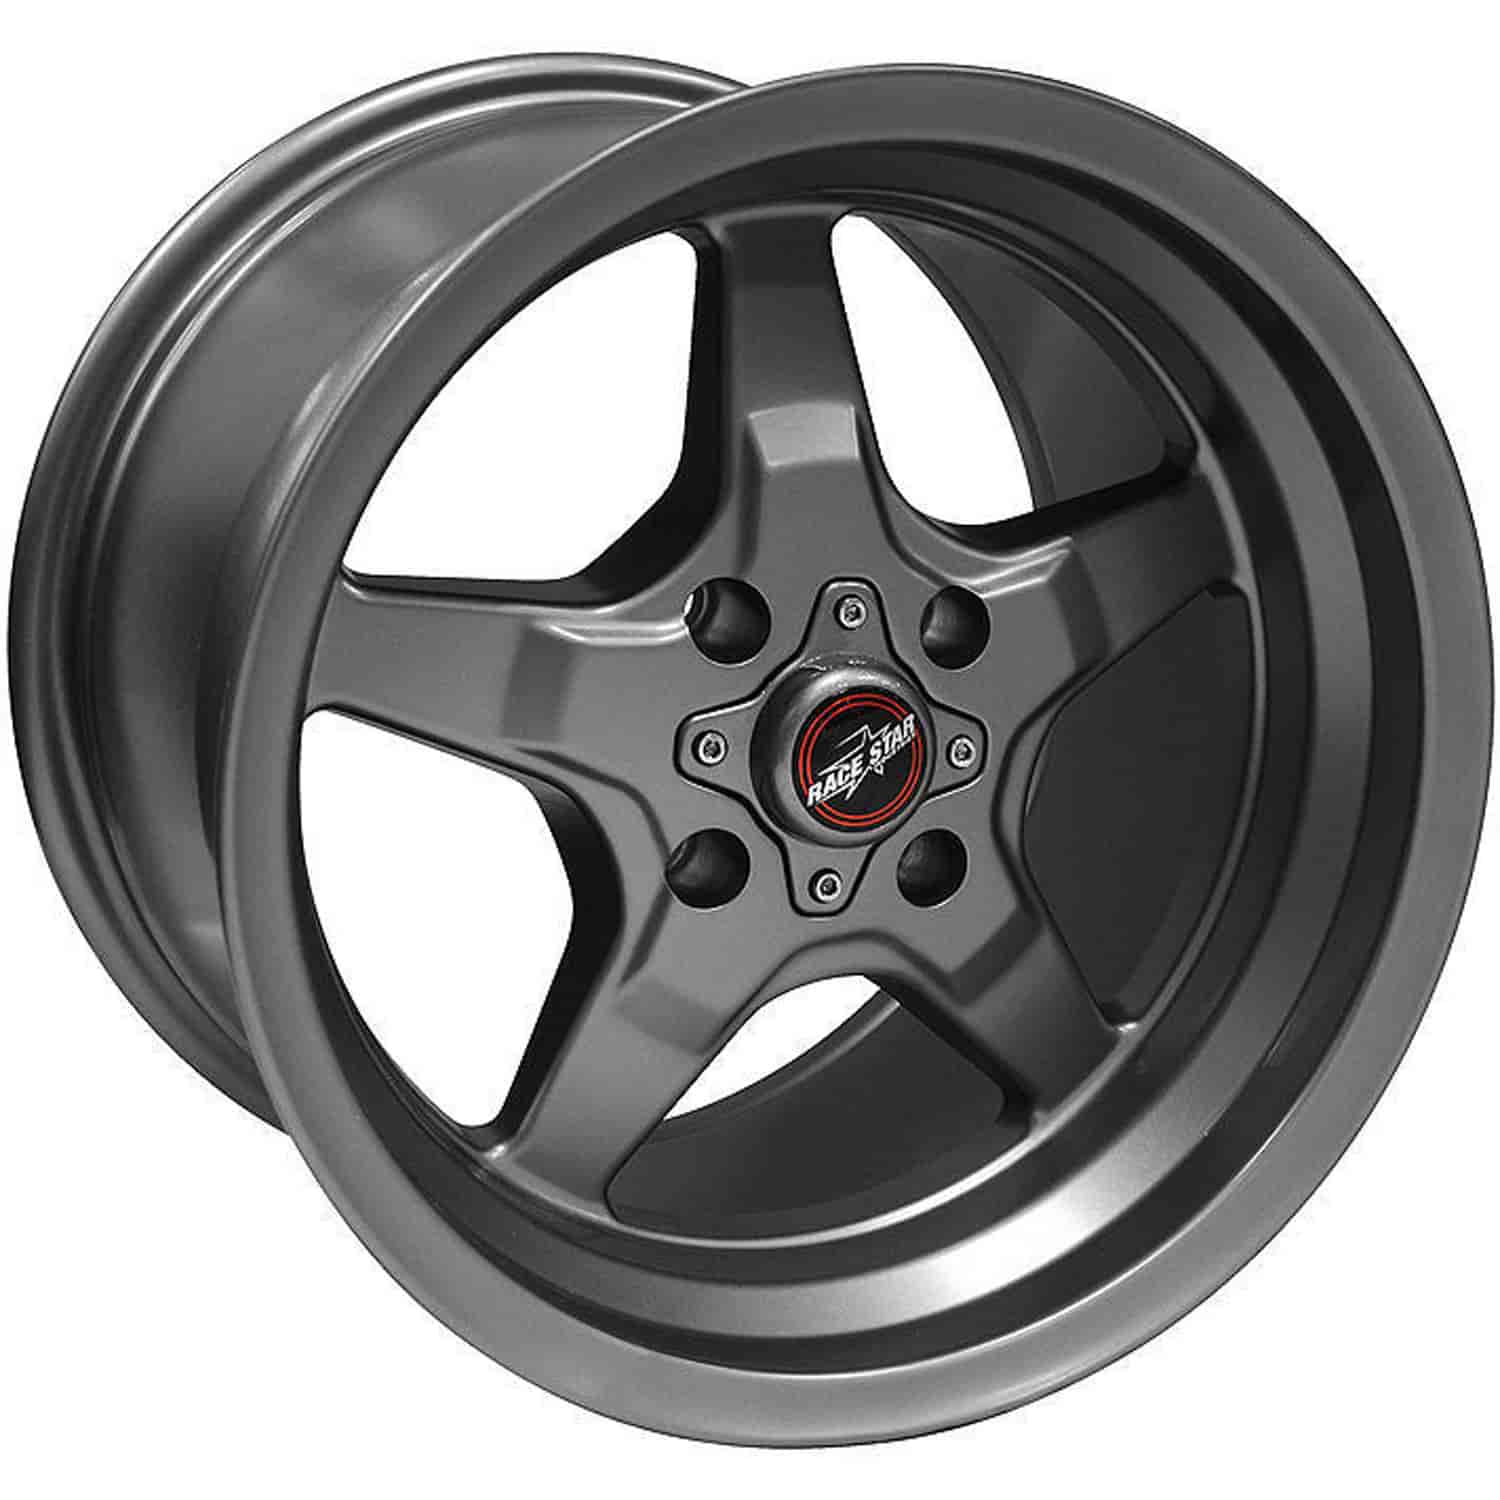 91 Series Drag Star Wheel 15" x 10" , 6.5" RS